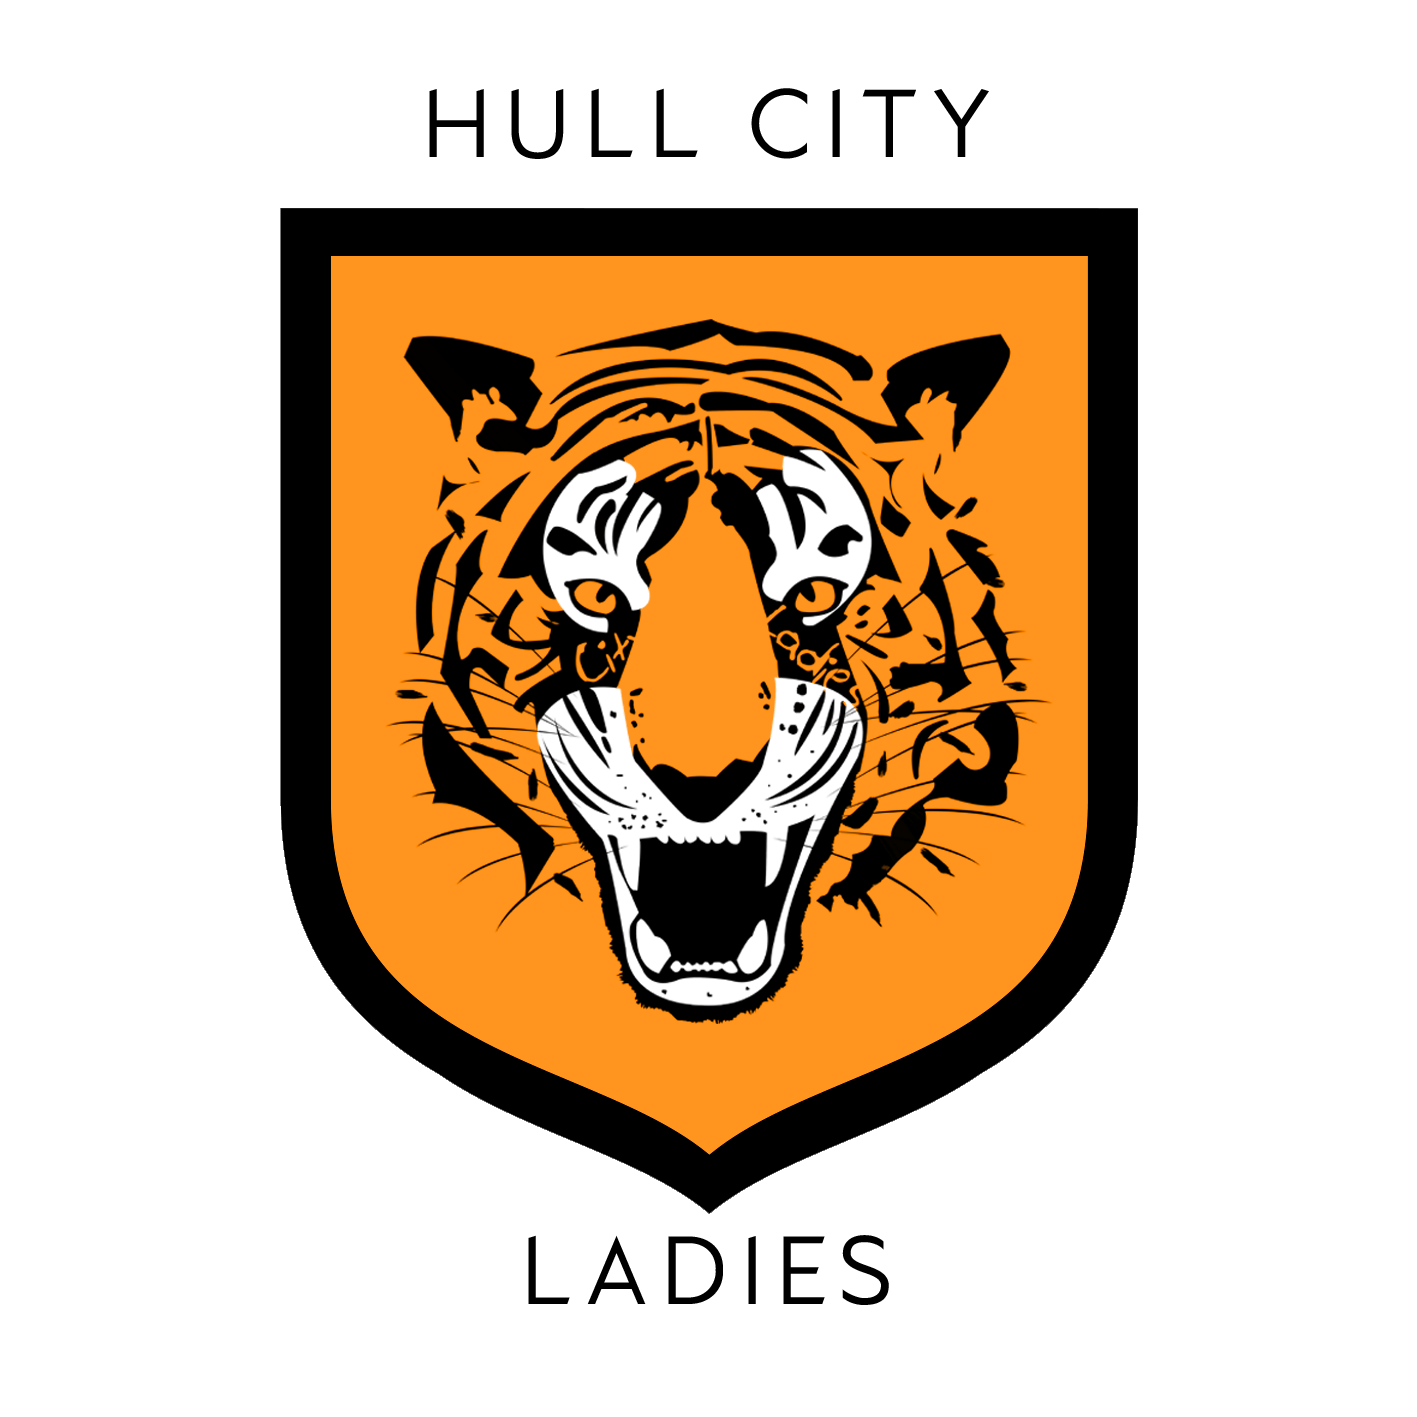 Hull Logo - hull-city-logo – Hull City Ladies